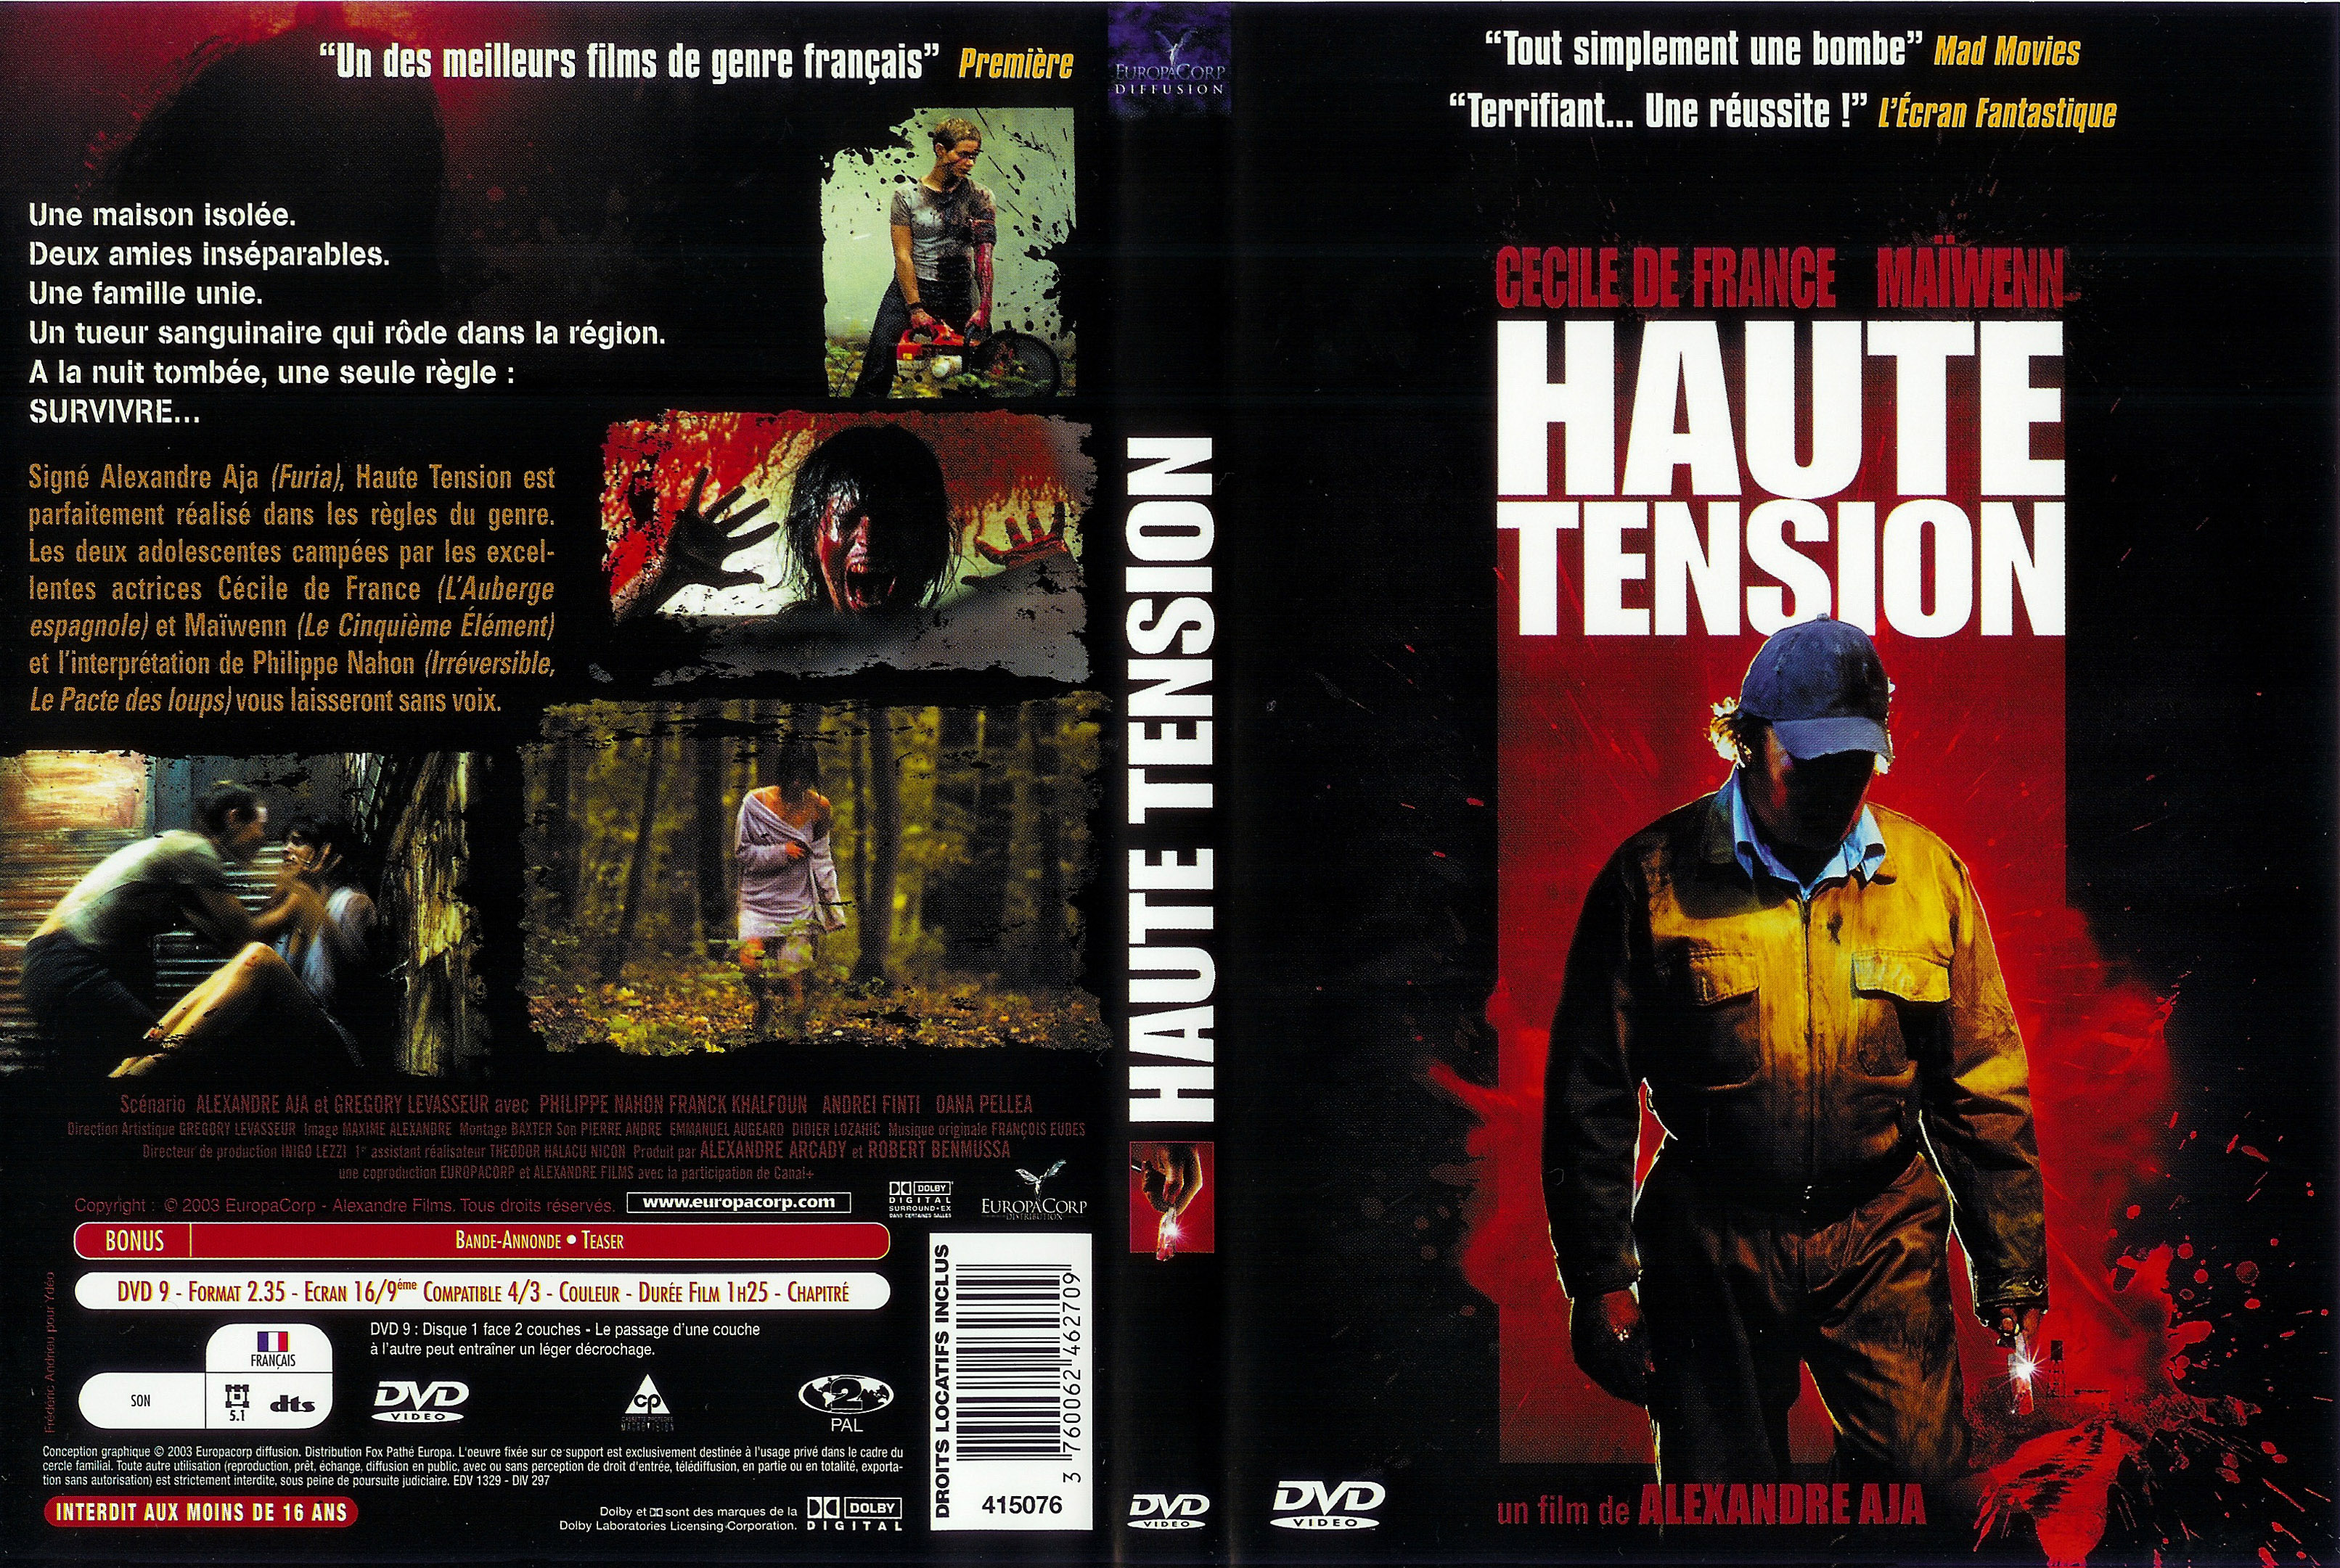 Jaquette DVD Haute tension v3